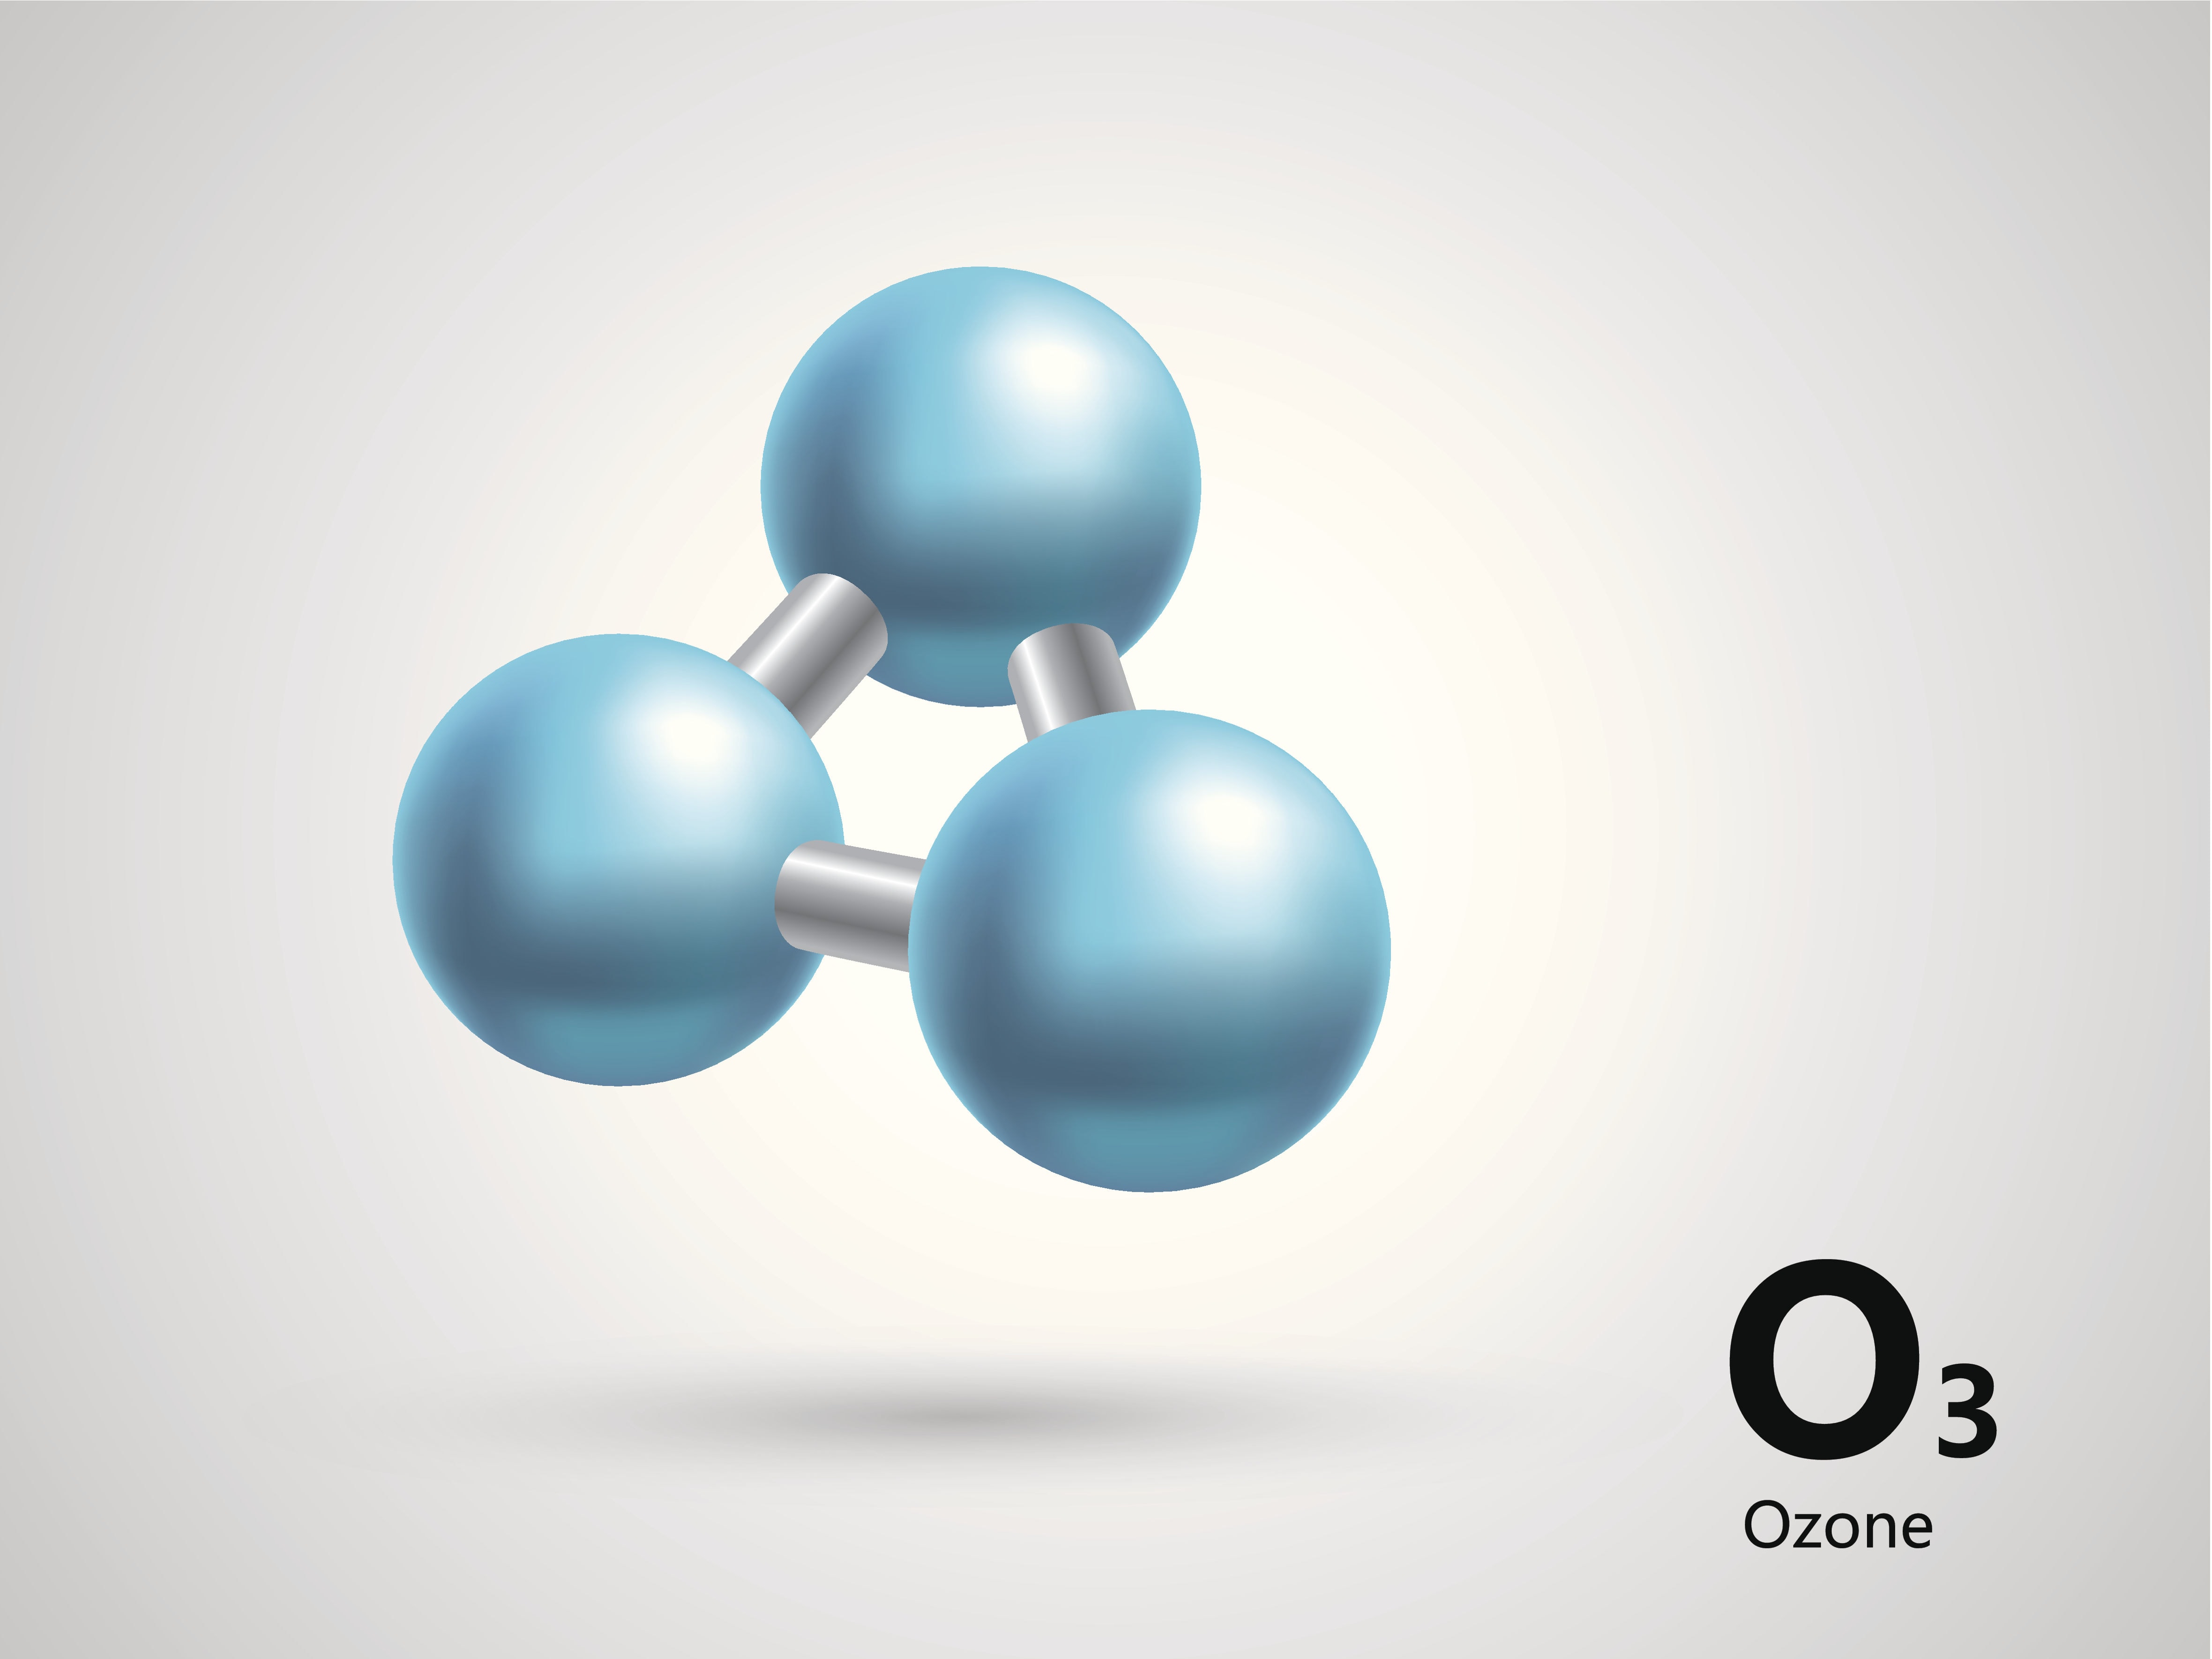 Модели молекул газов. Молекула озона o3. Молекула кислорода о3 модель атома. Модель молекулы озона. Макет молекулы кислорода.